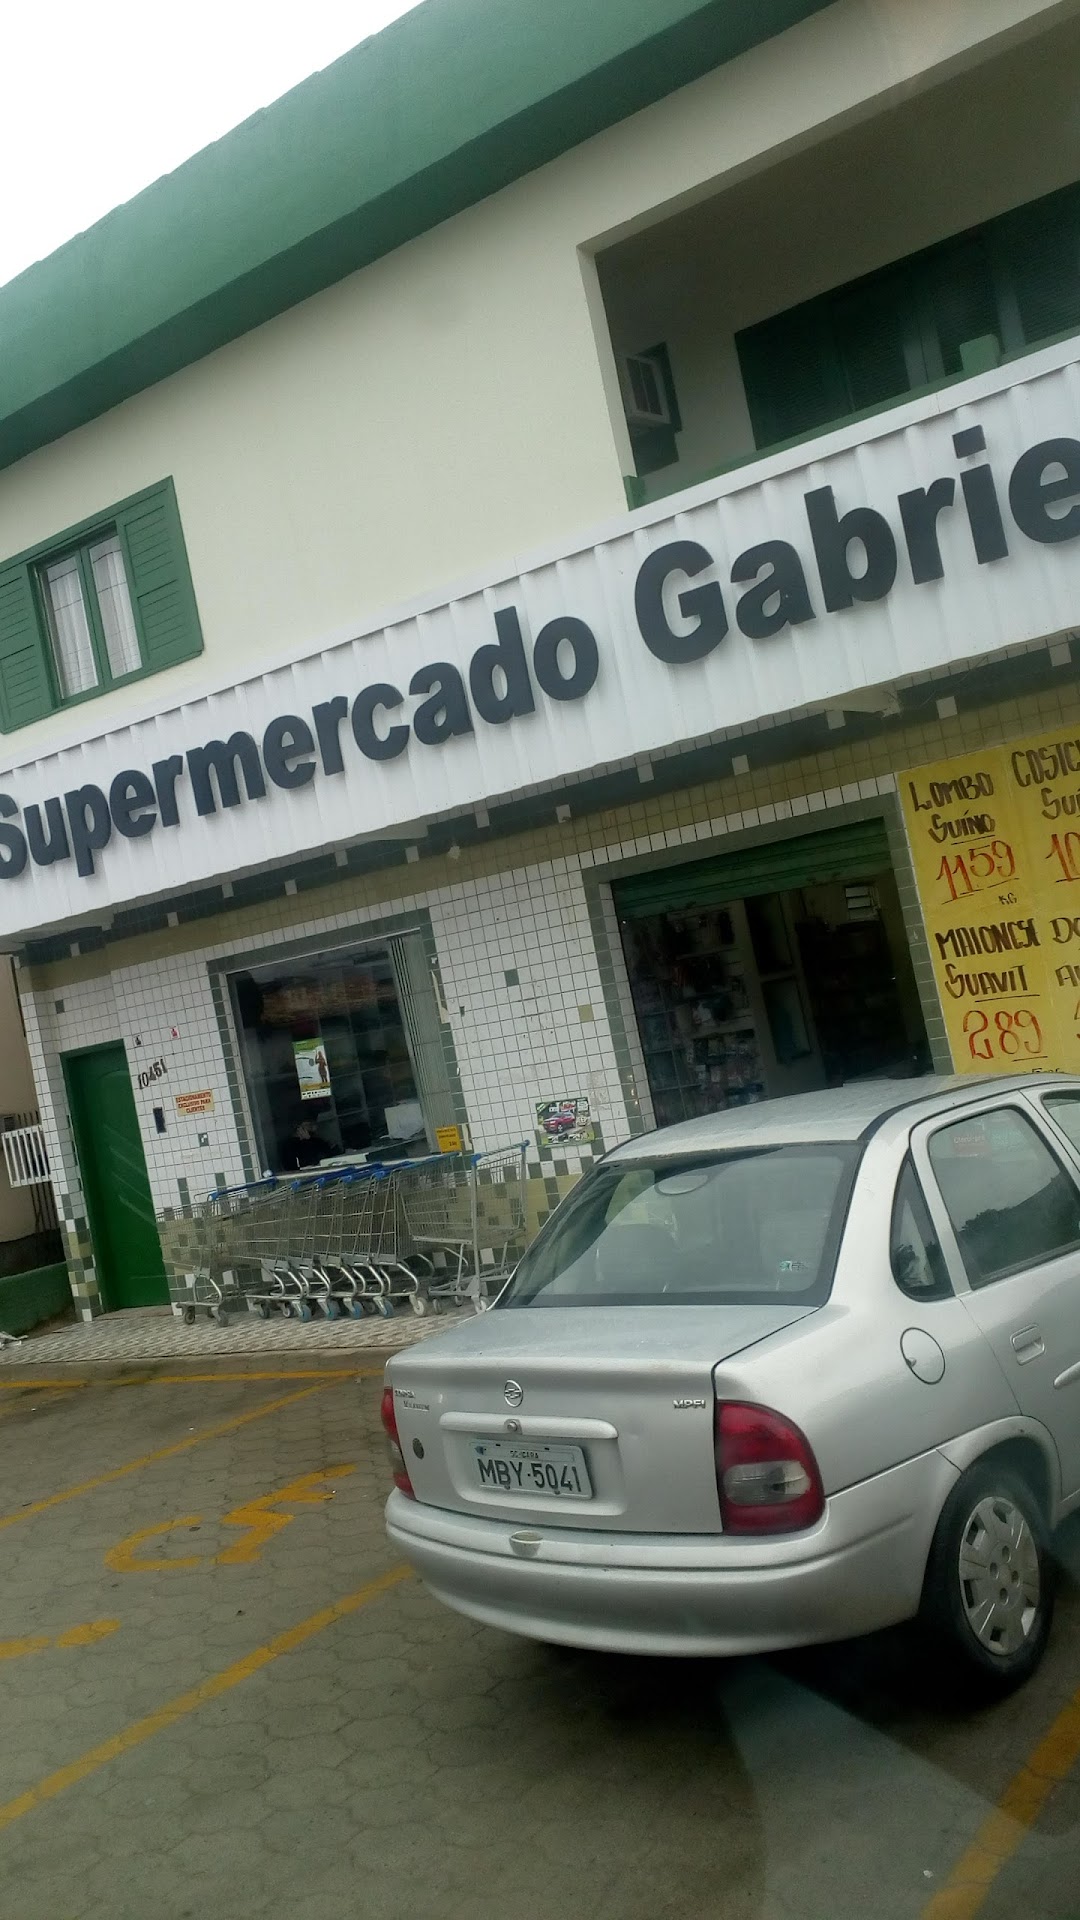 Supermercado Gabriel